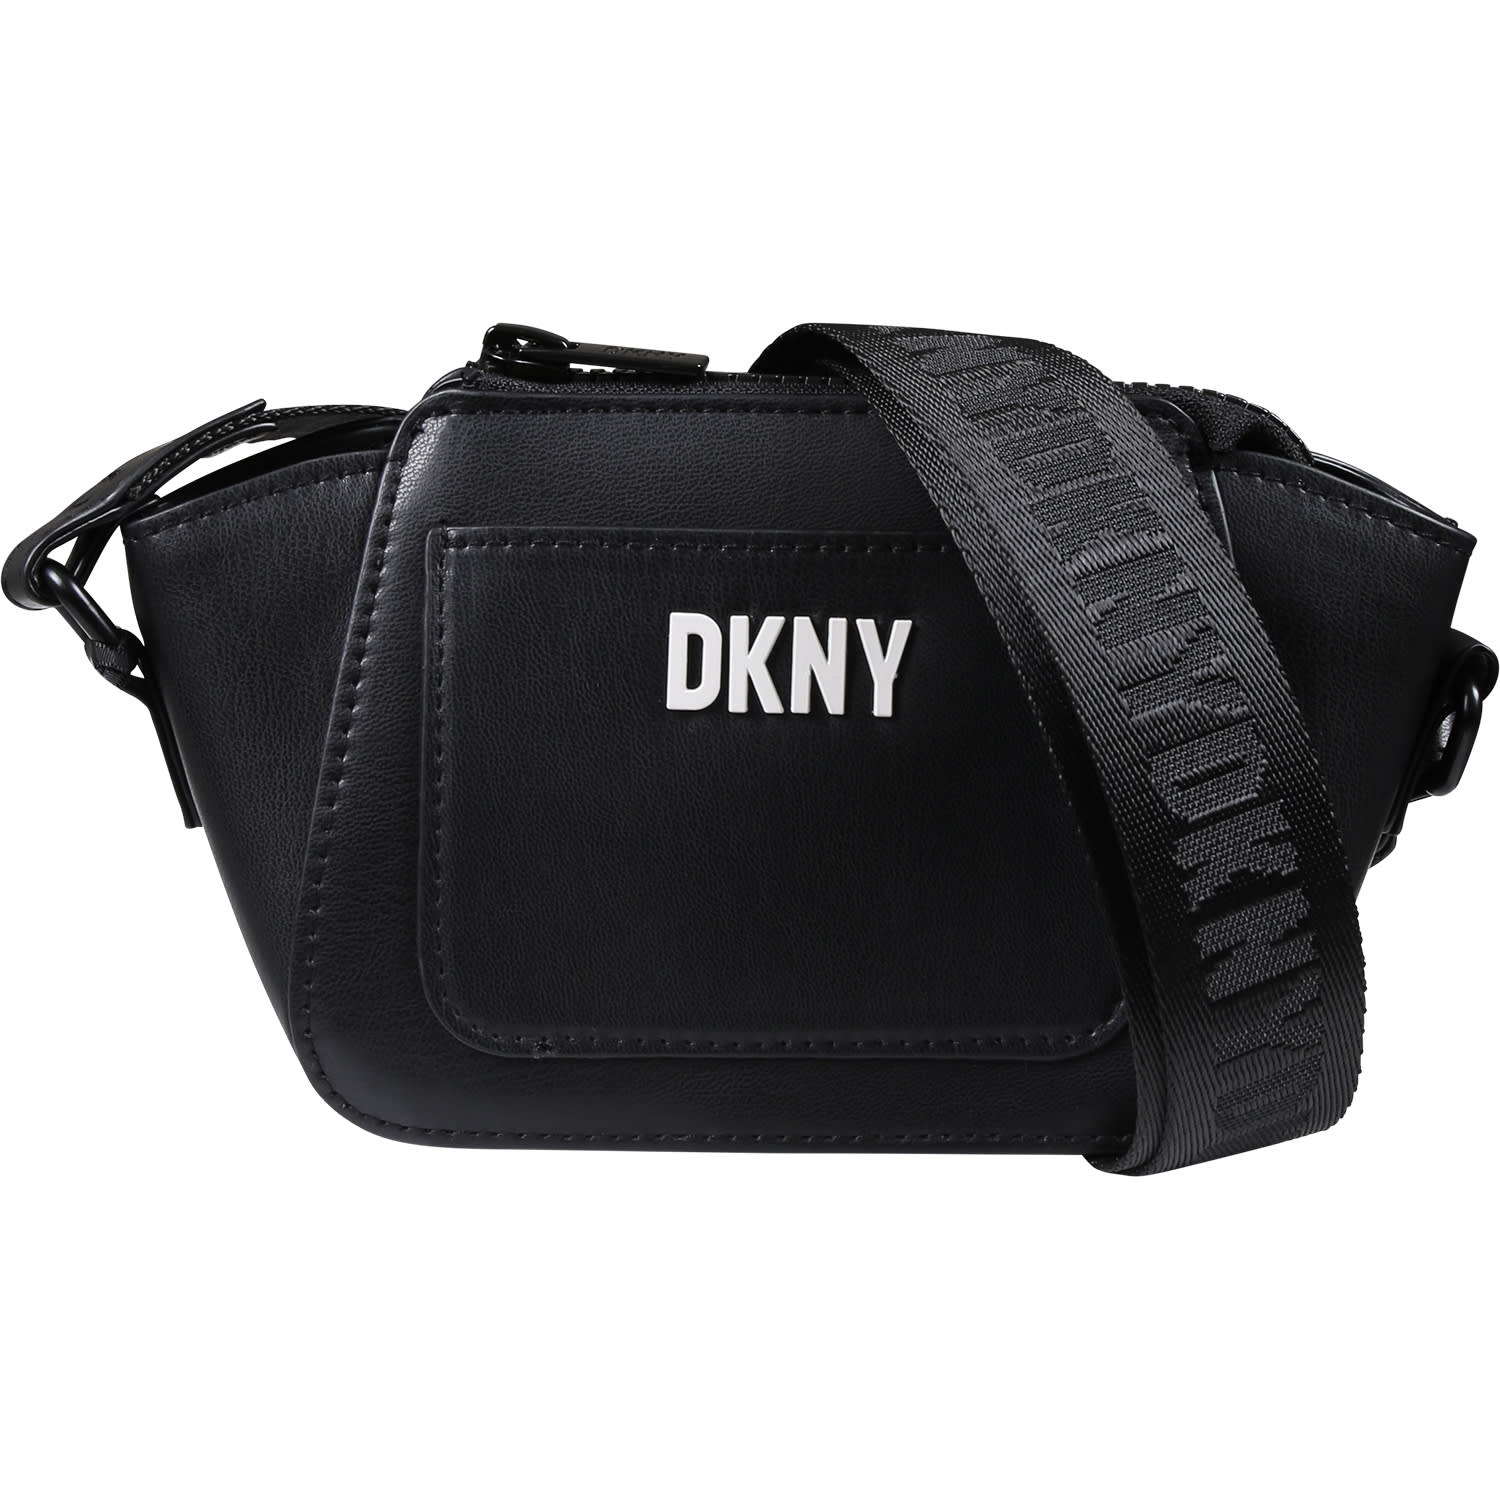 DKNY Black Bag For Girl With Logo